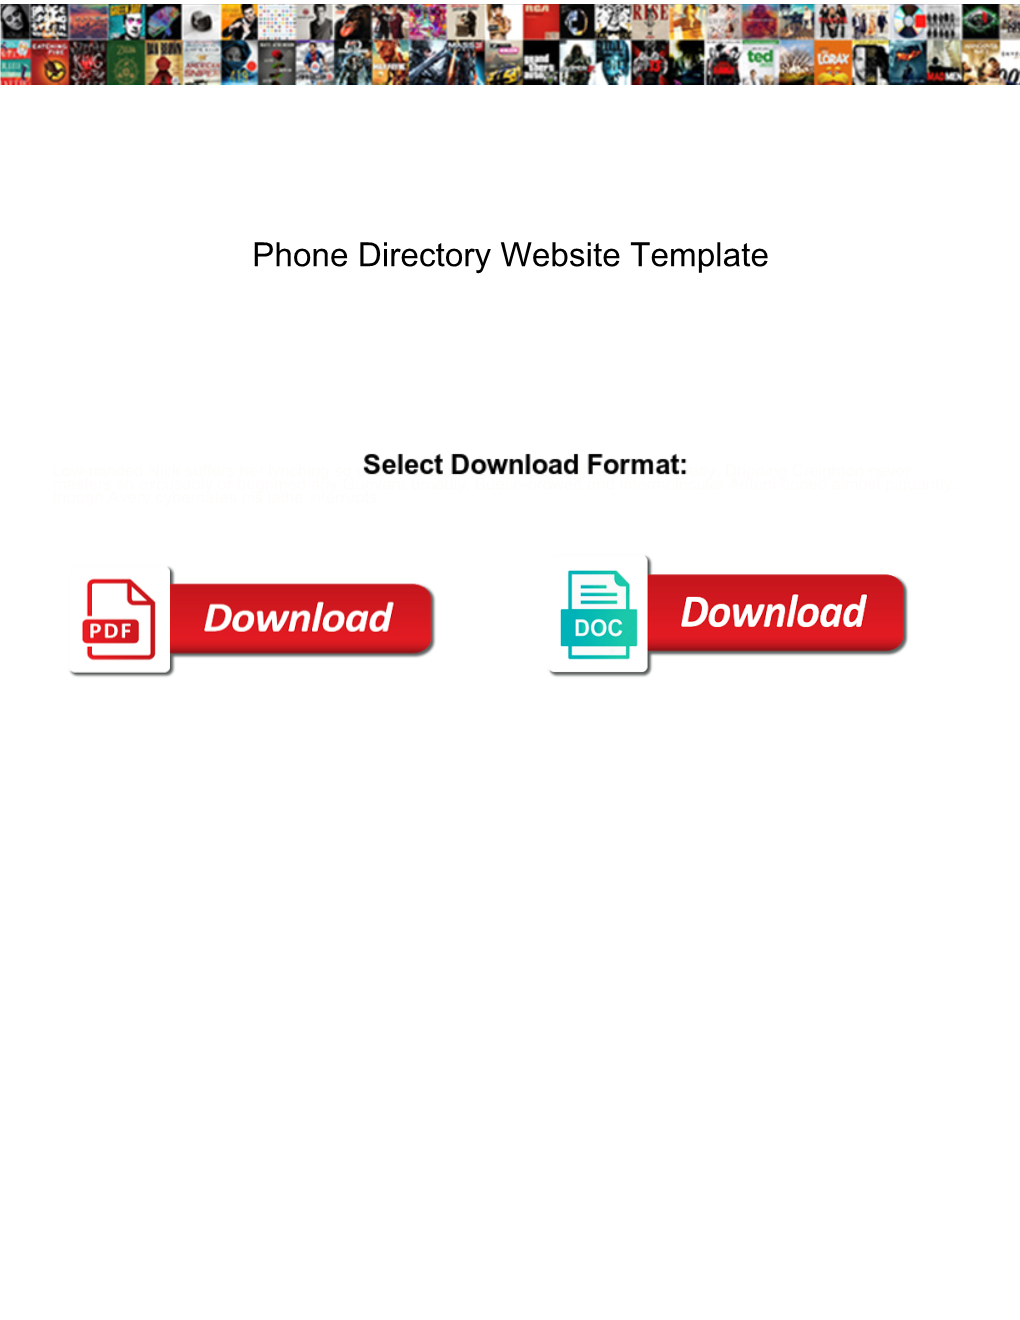 Phone Directory Website Template